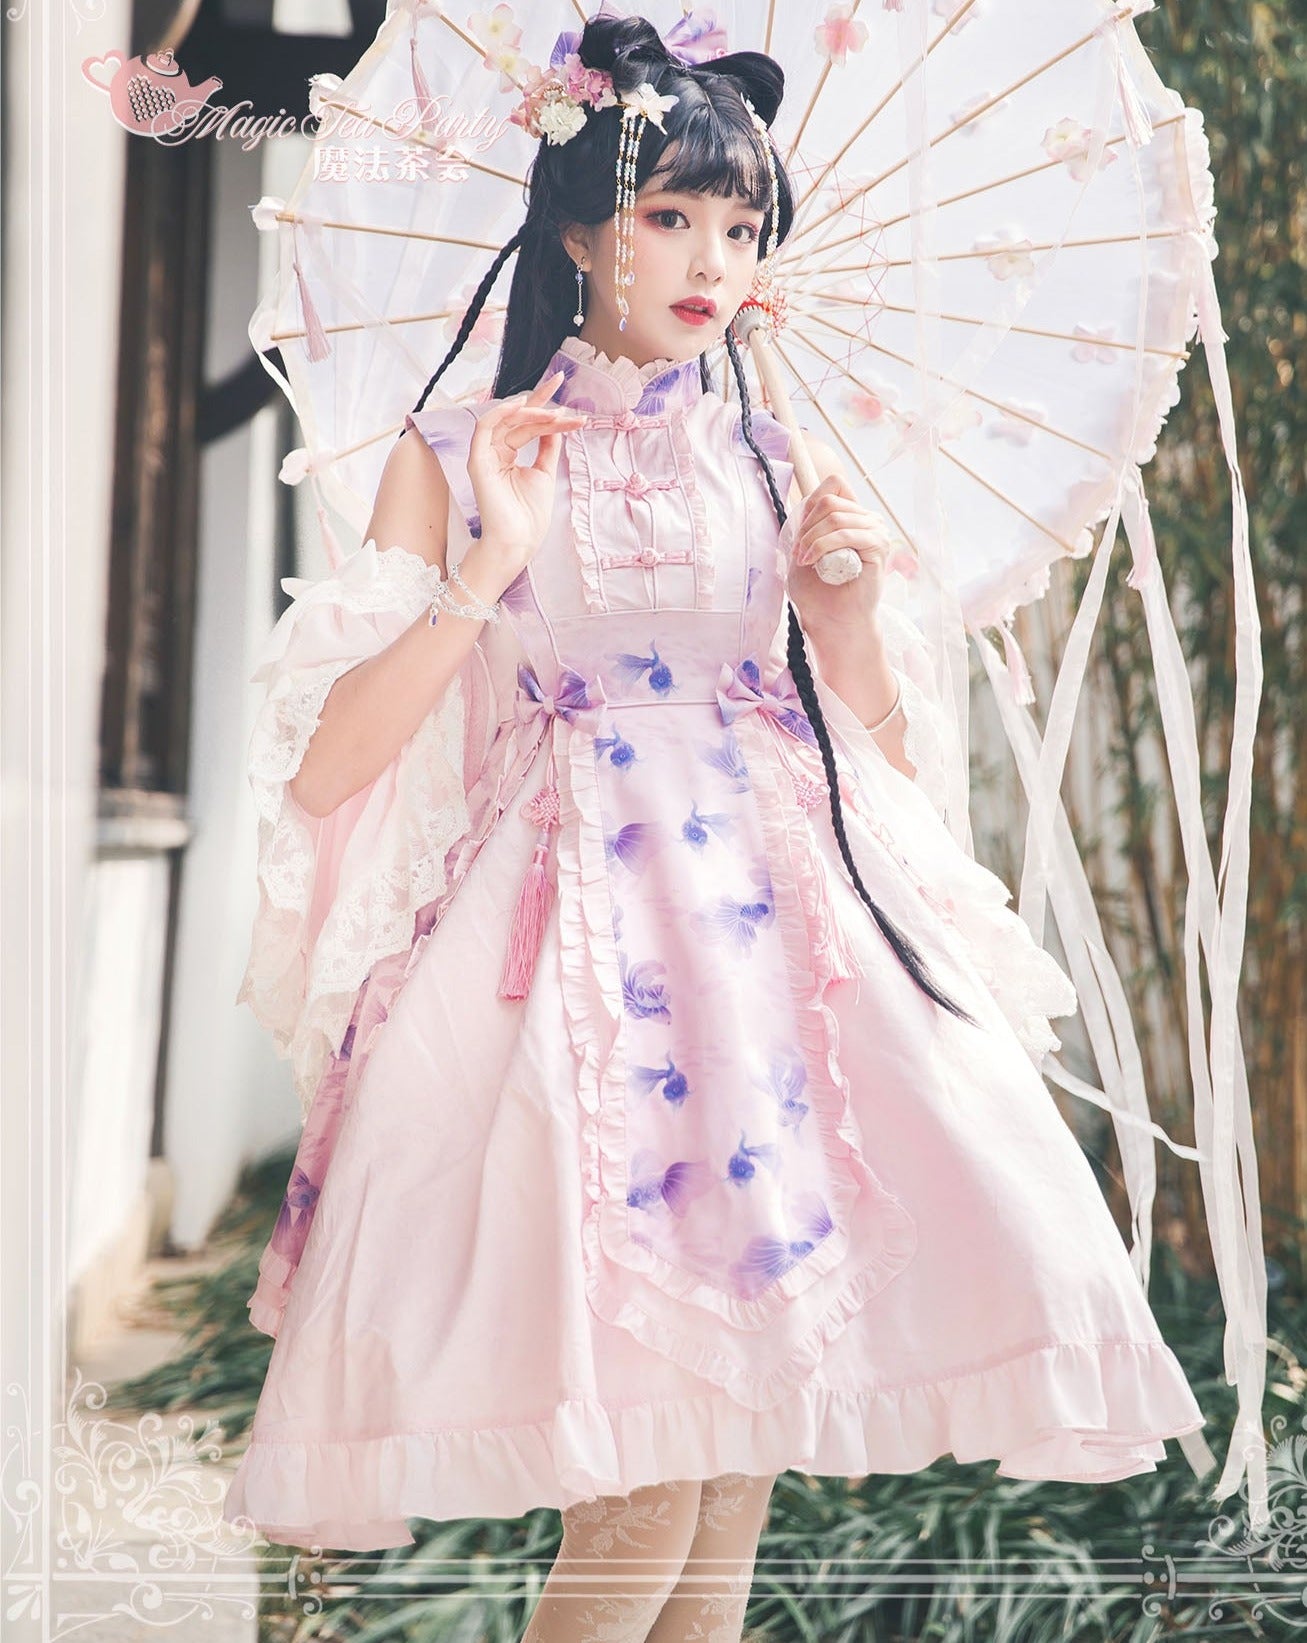 Yumemiru Goldfish Flower Lolita Dress with Arm Sleeves and Hair Accessories